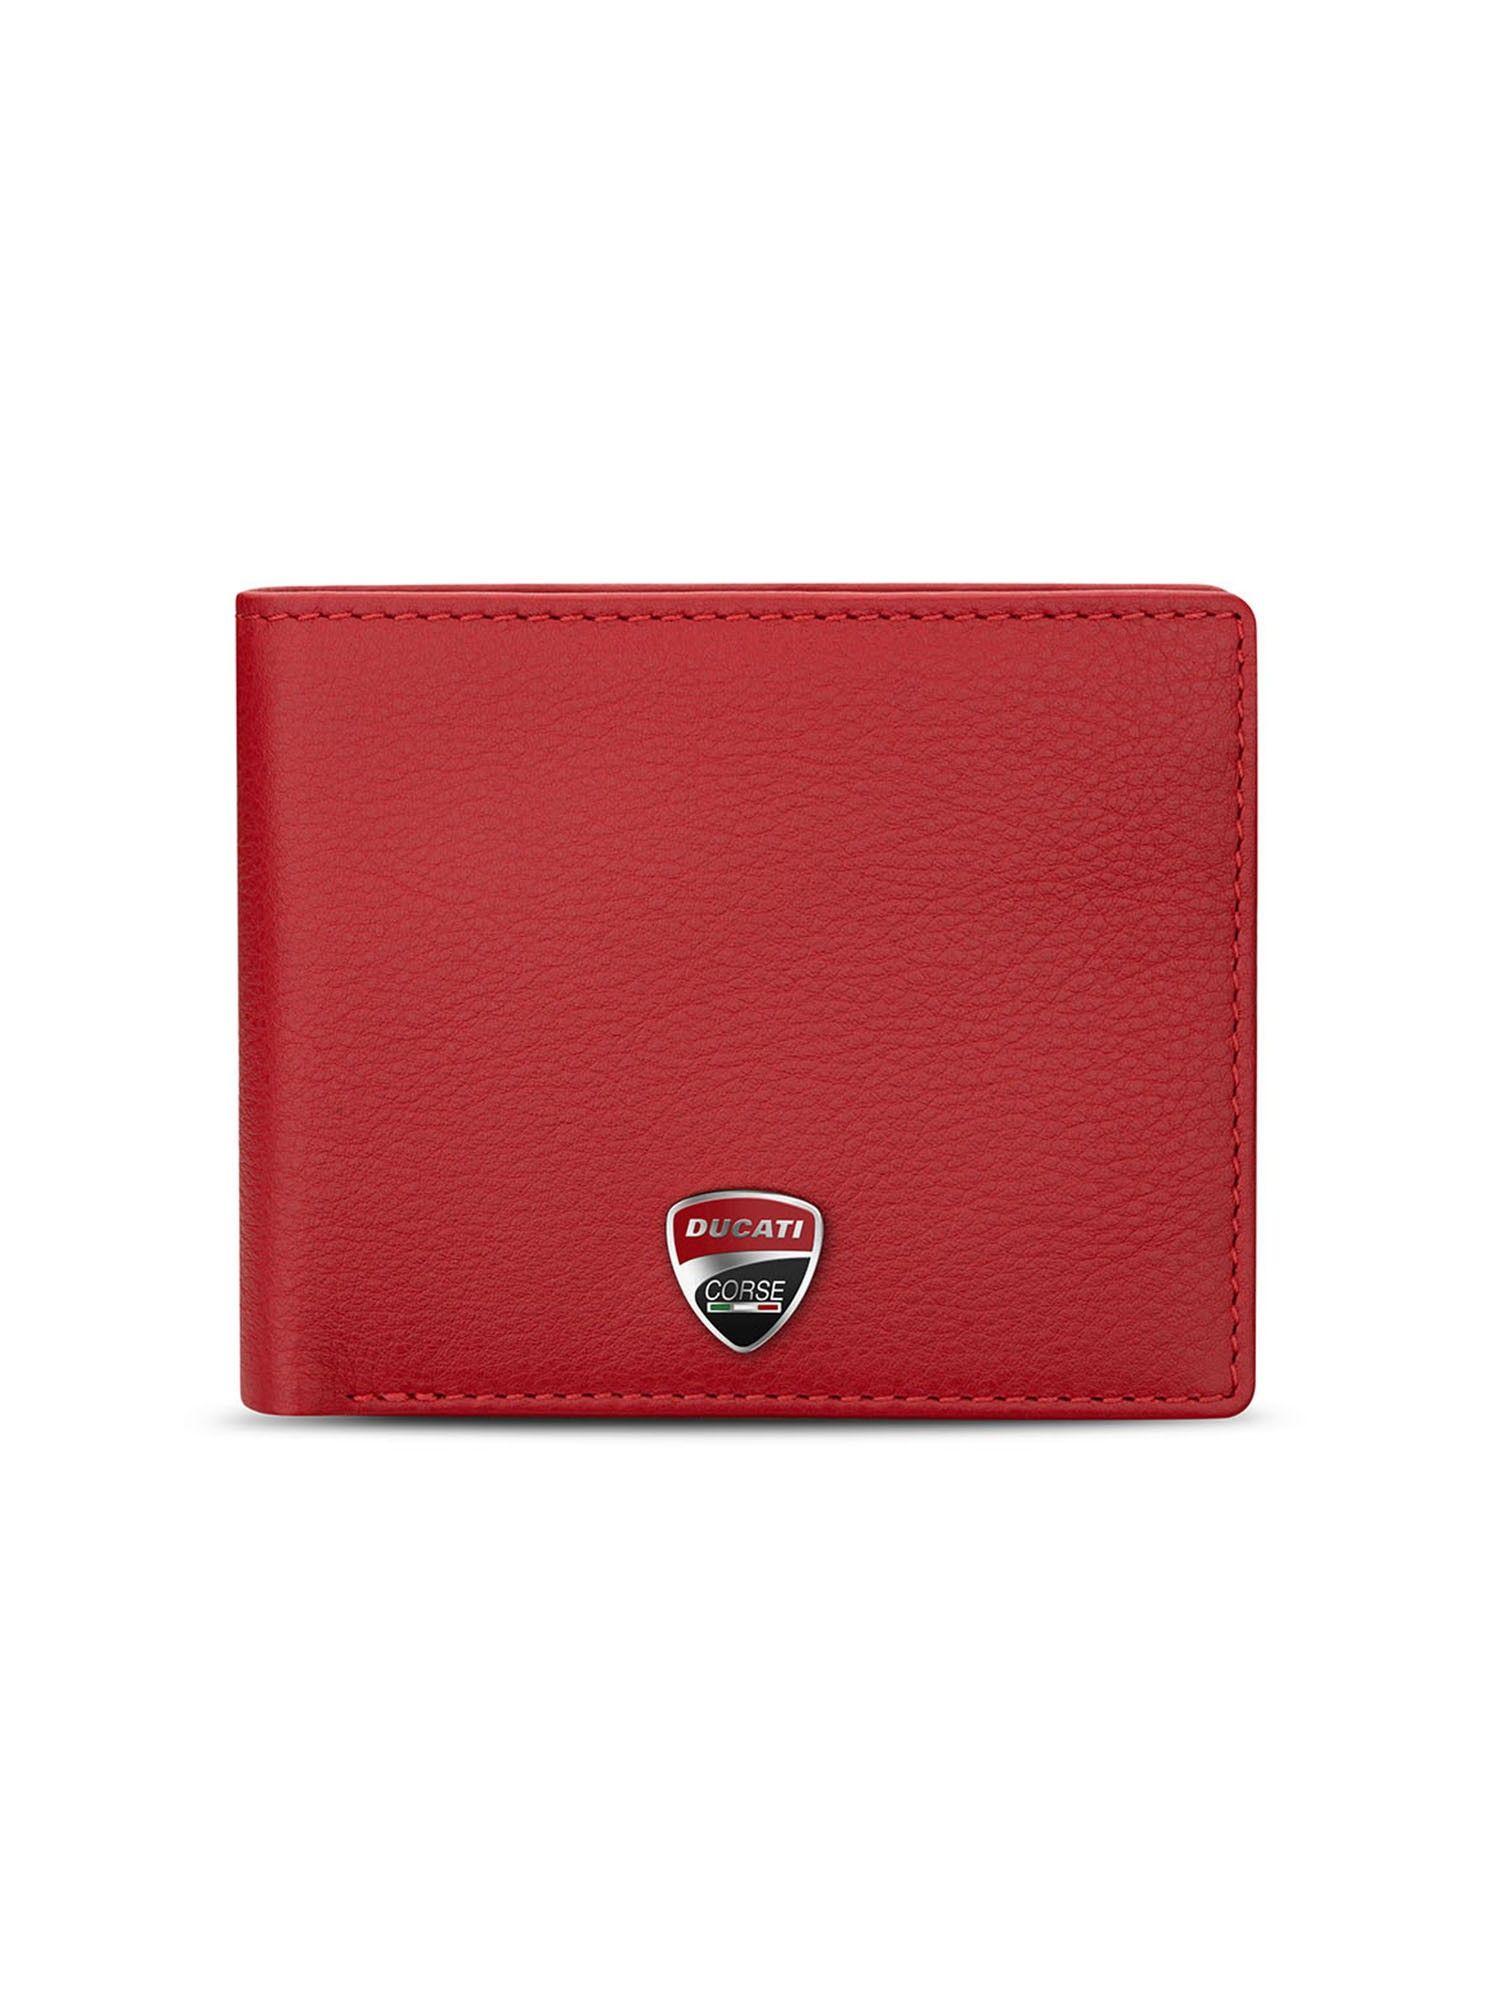 lucca genuine leather wallet for men - dtlgw2201006